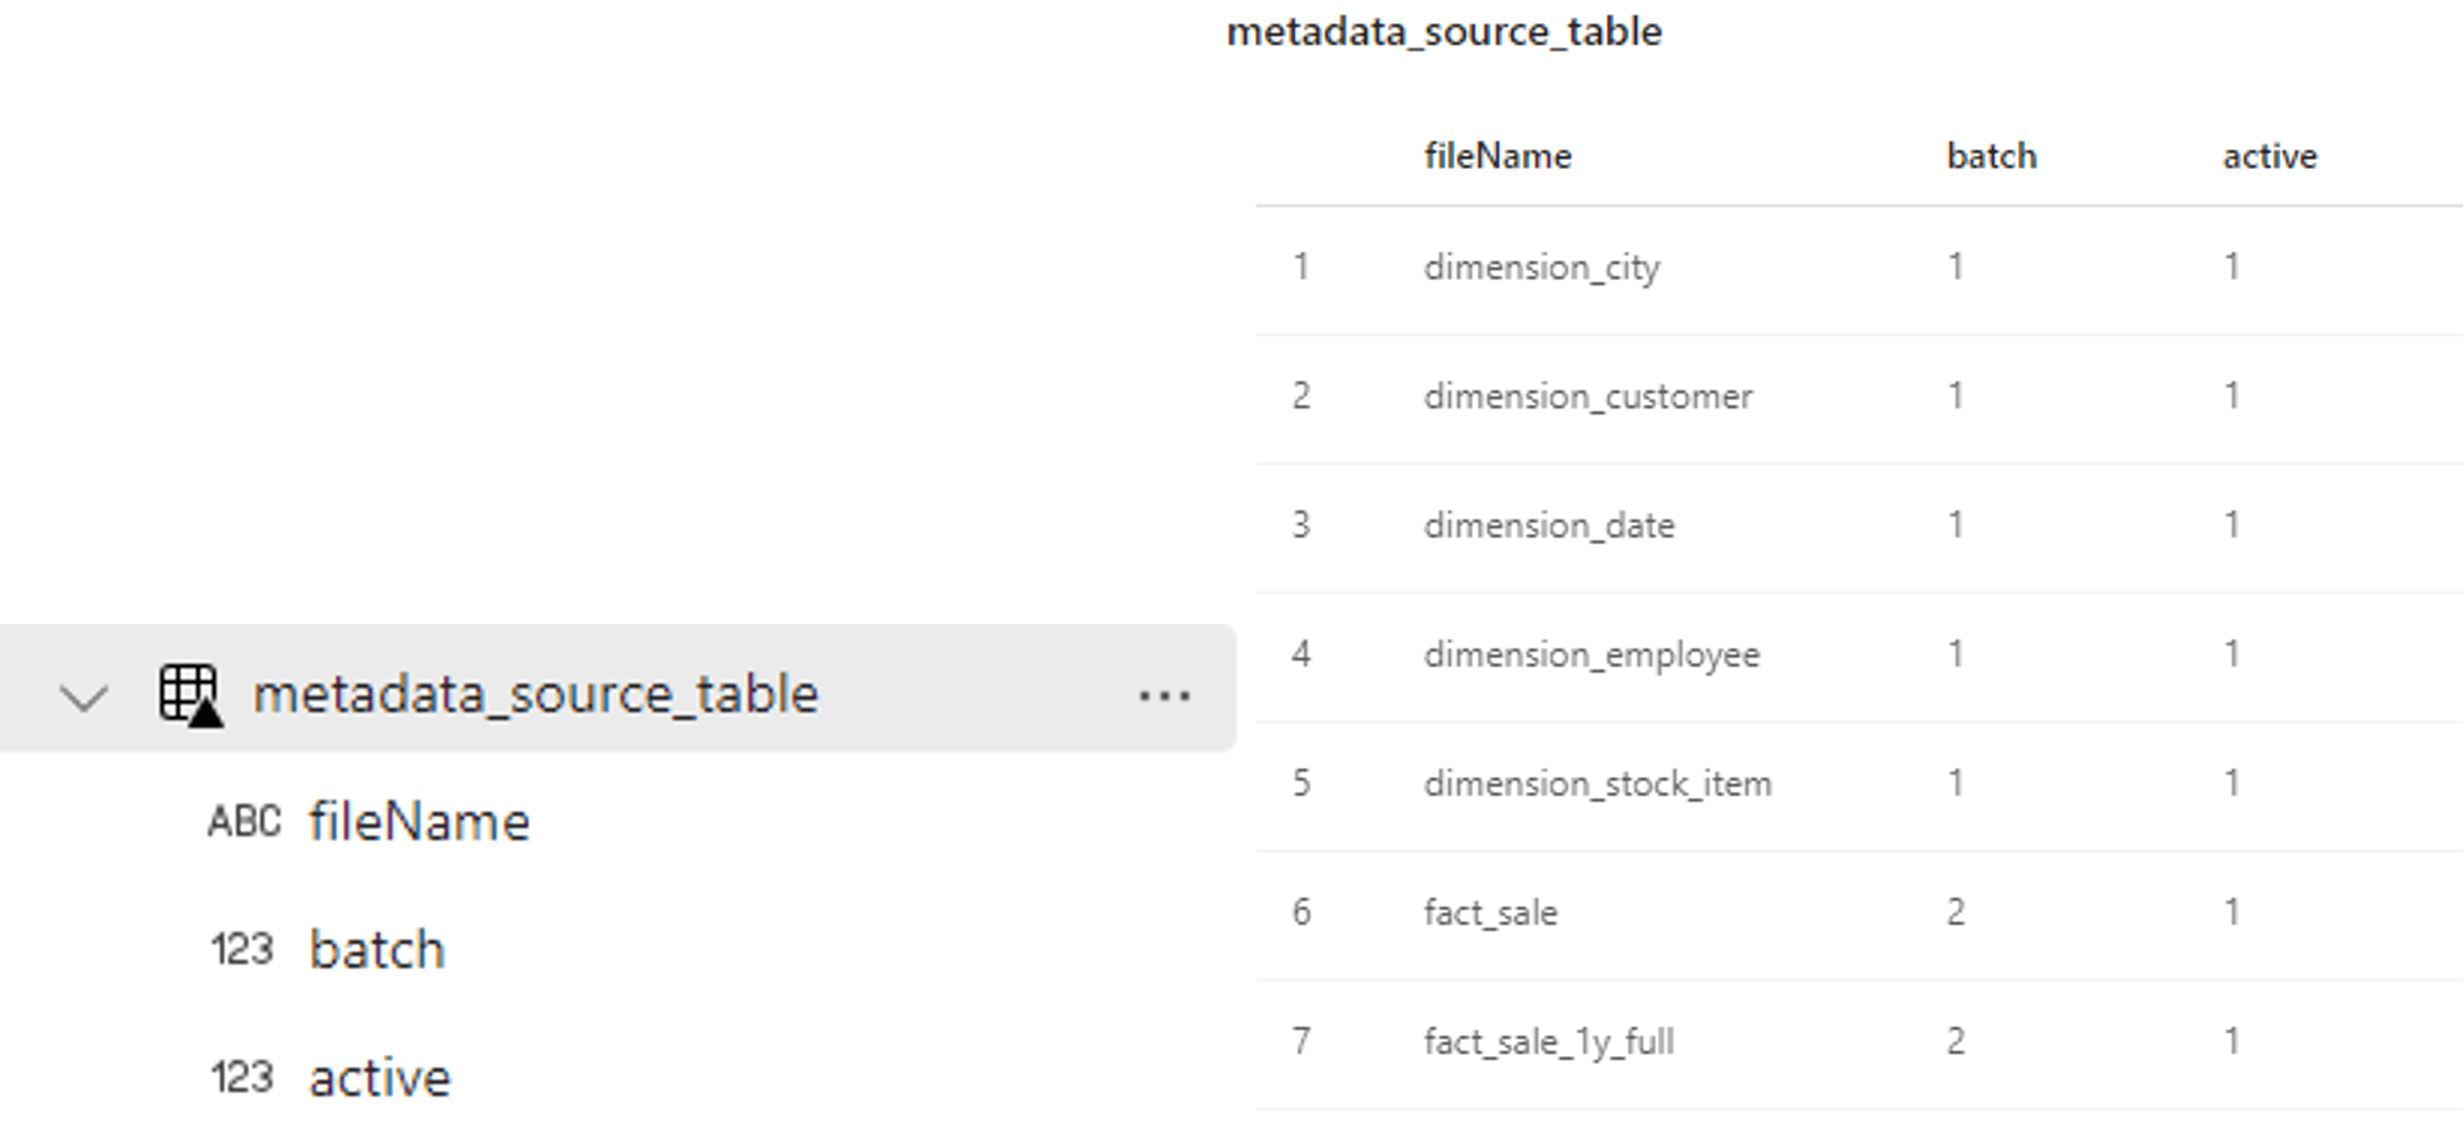 Metadata source table for Microsoft fabric data pipeline